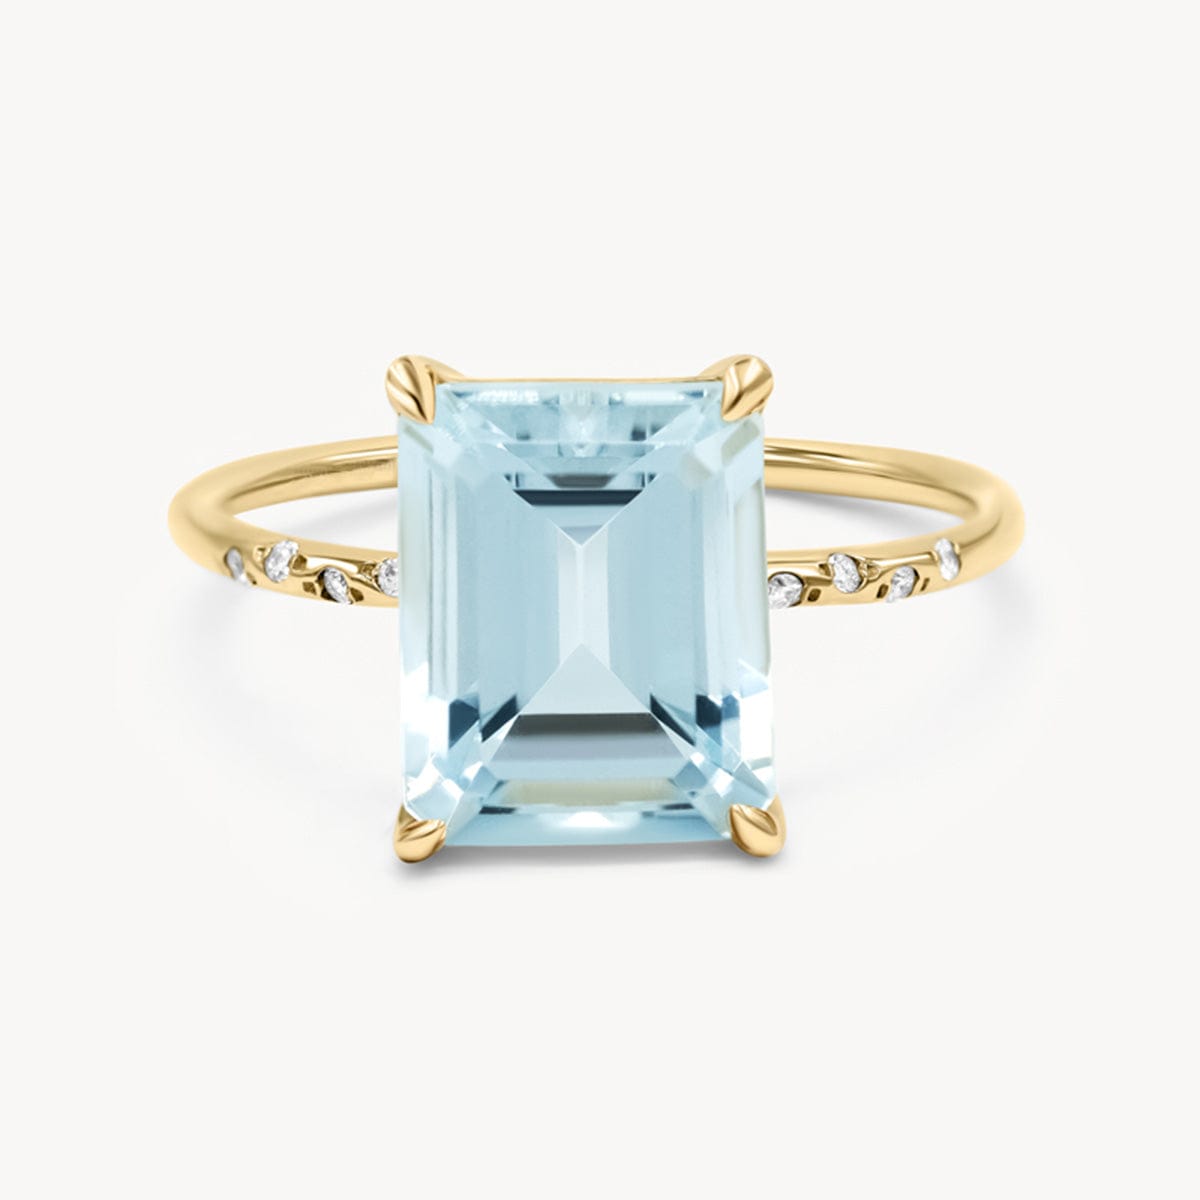 Emerald Cut Aquamarine and Diamond Ring in 14K Gold | Audry Rose